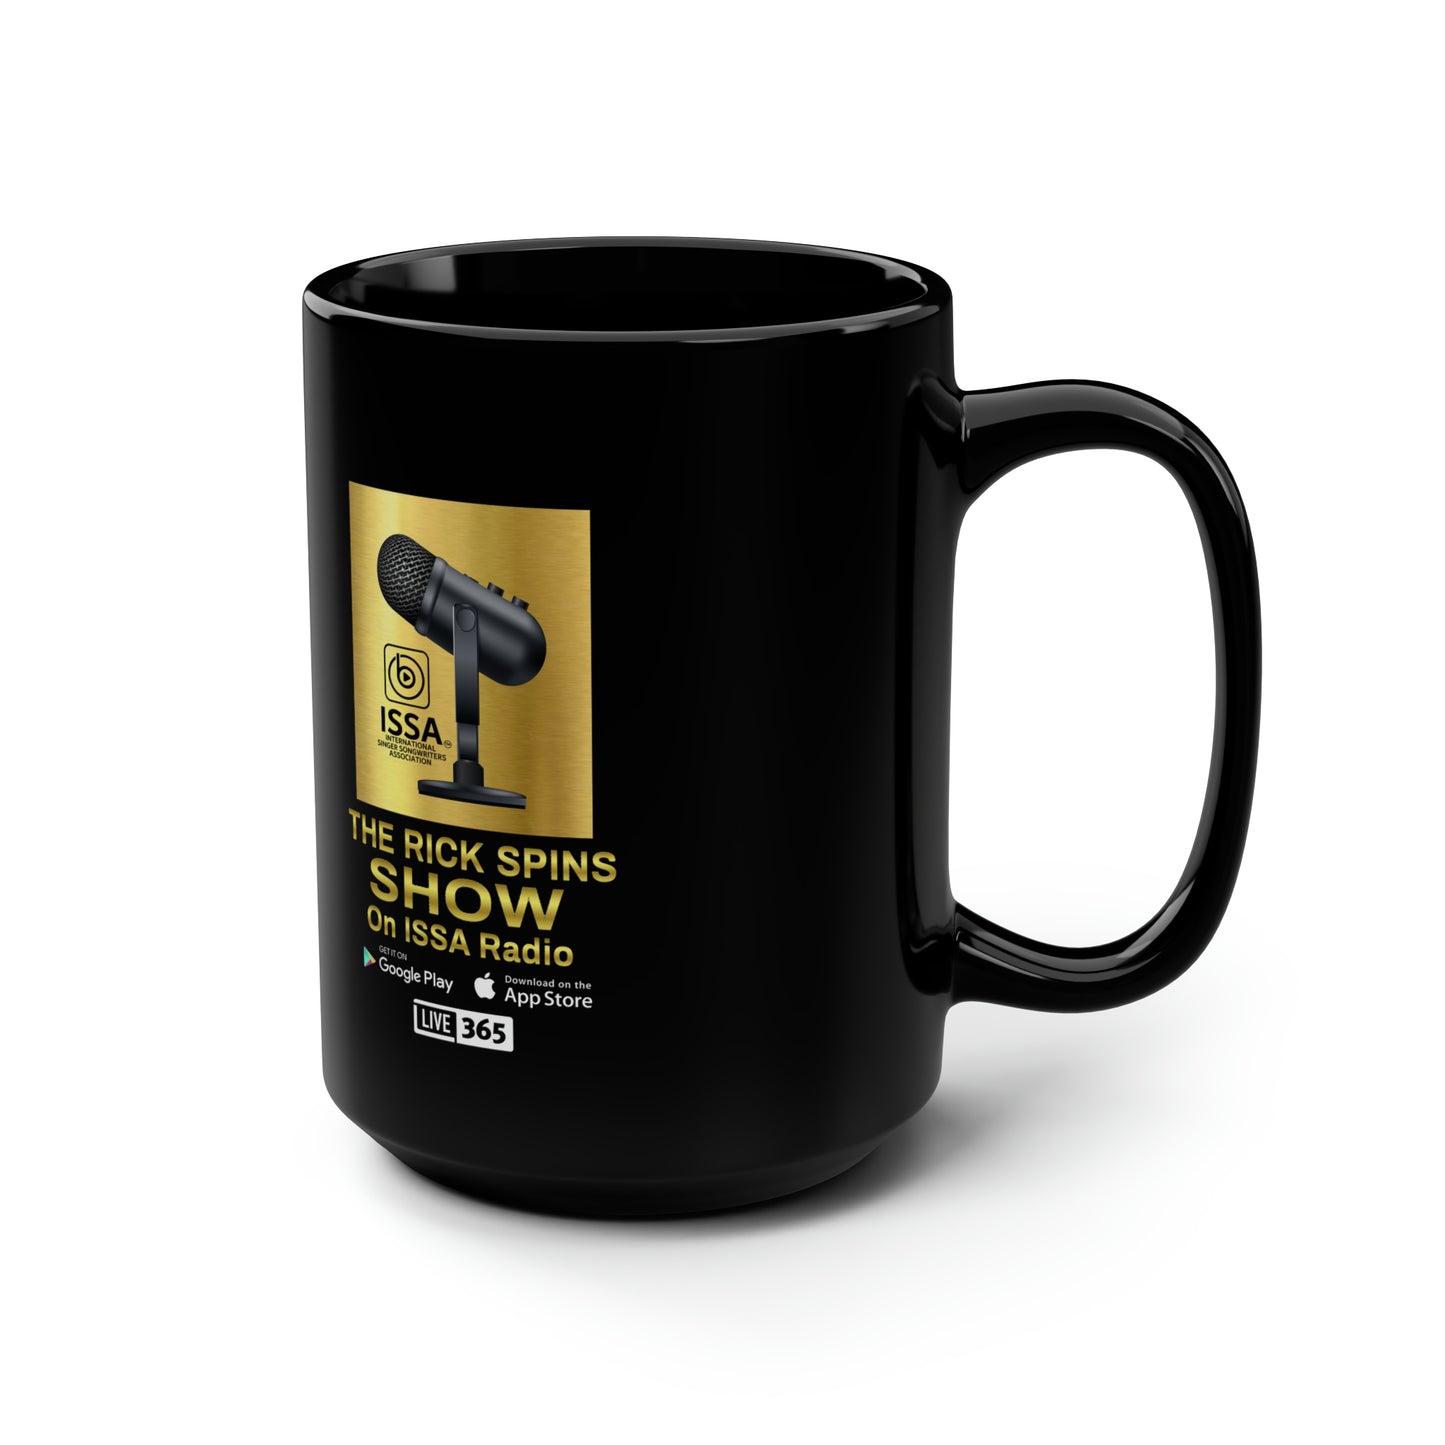 The Rick Spins Show on ISSA Radio 15 oz. Coffee Mug Large Black